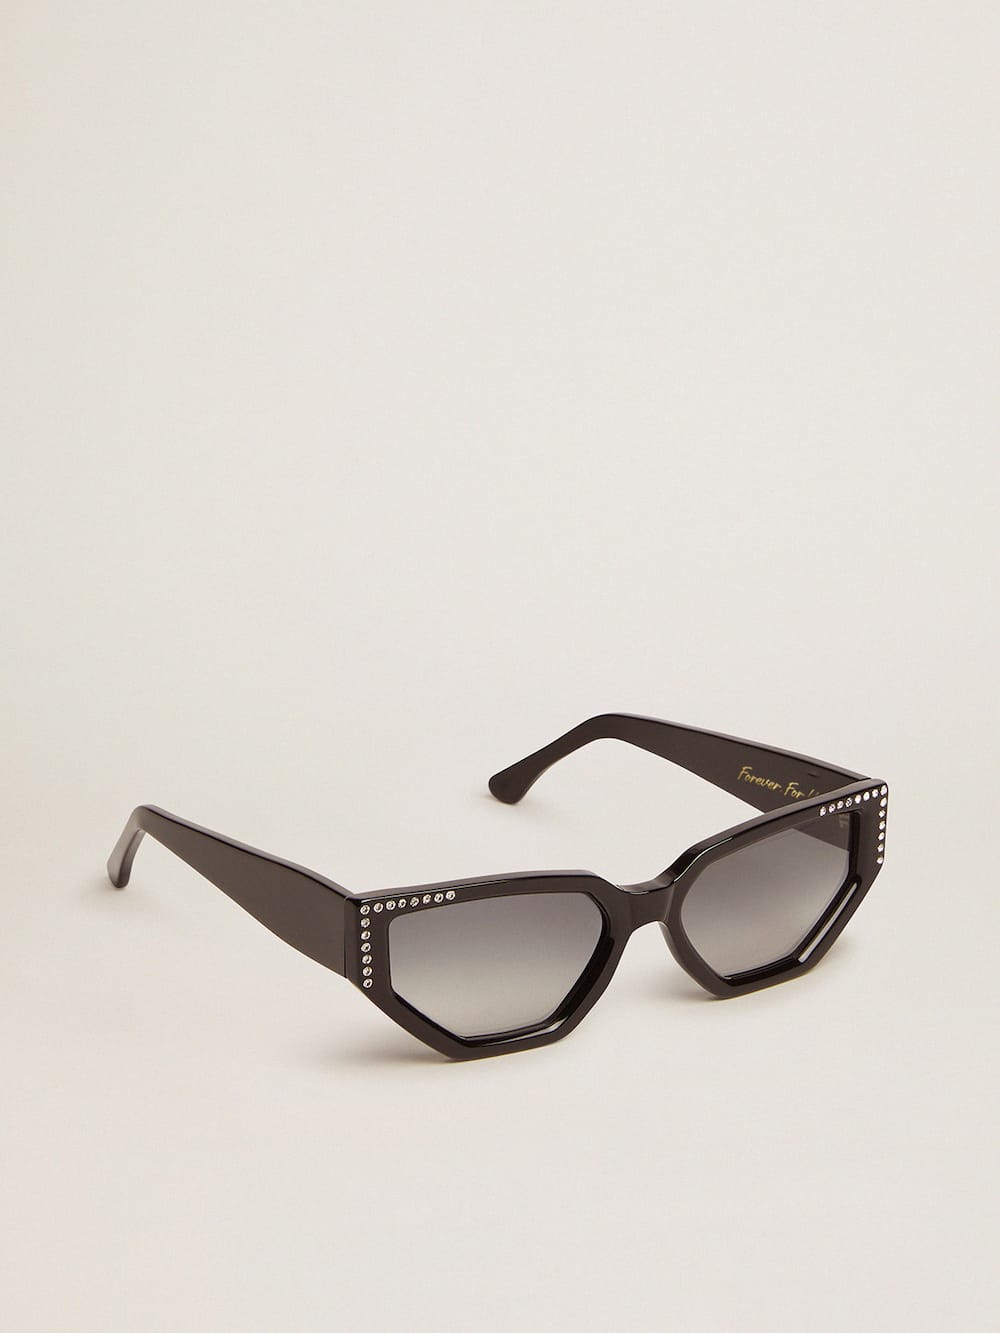 Golden Goose - Gafas de sol modelo rectangular con montura y cristales negros in 